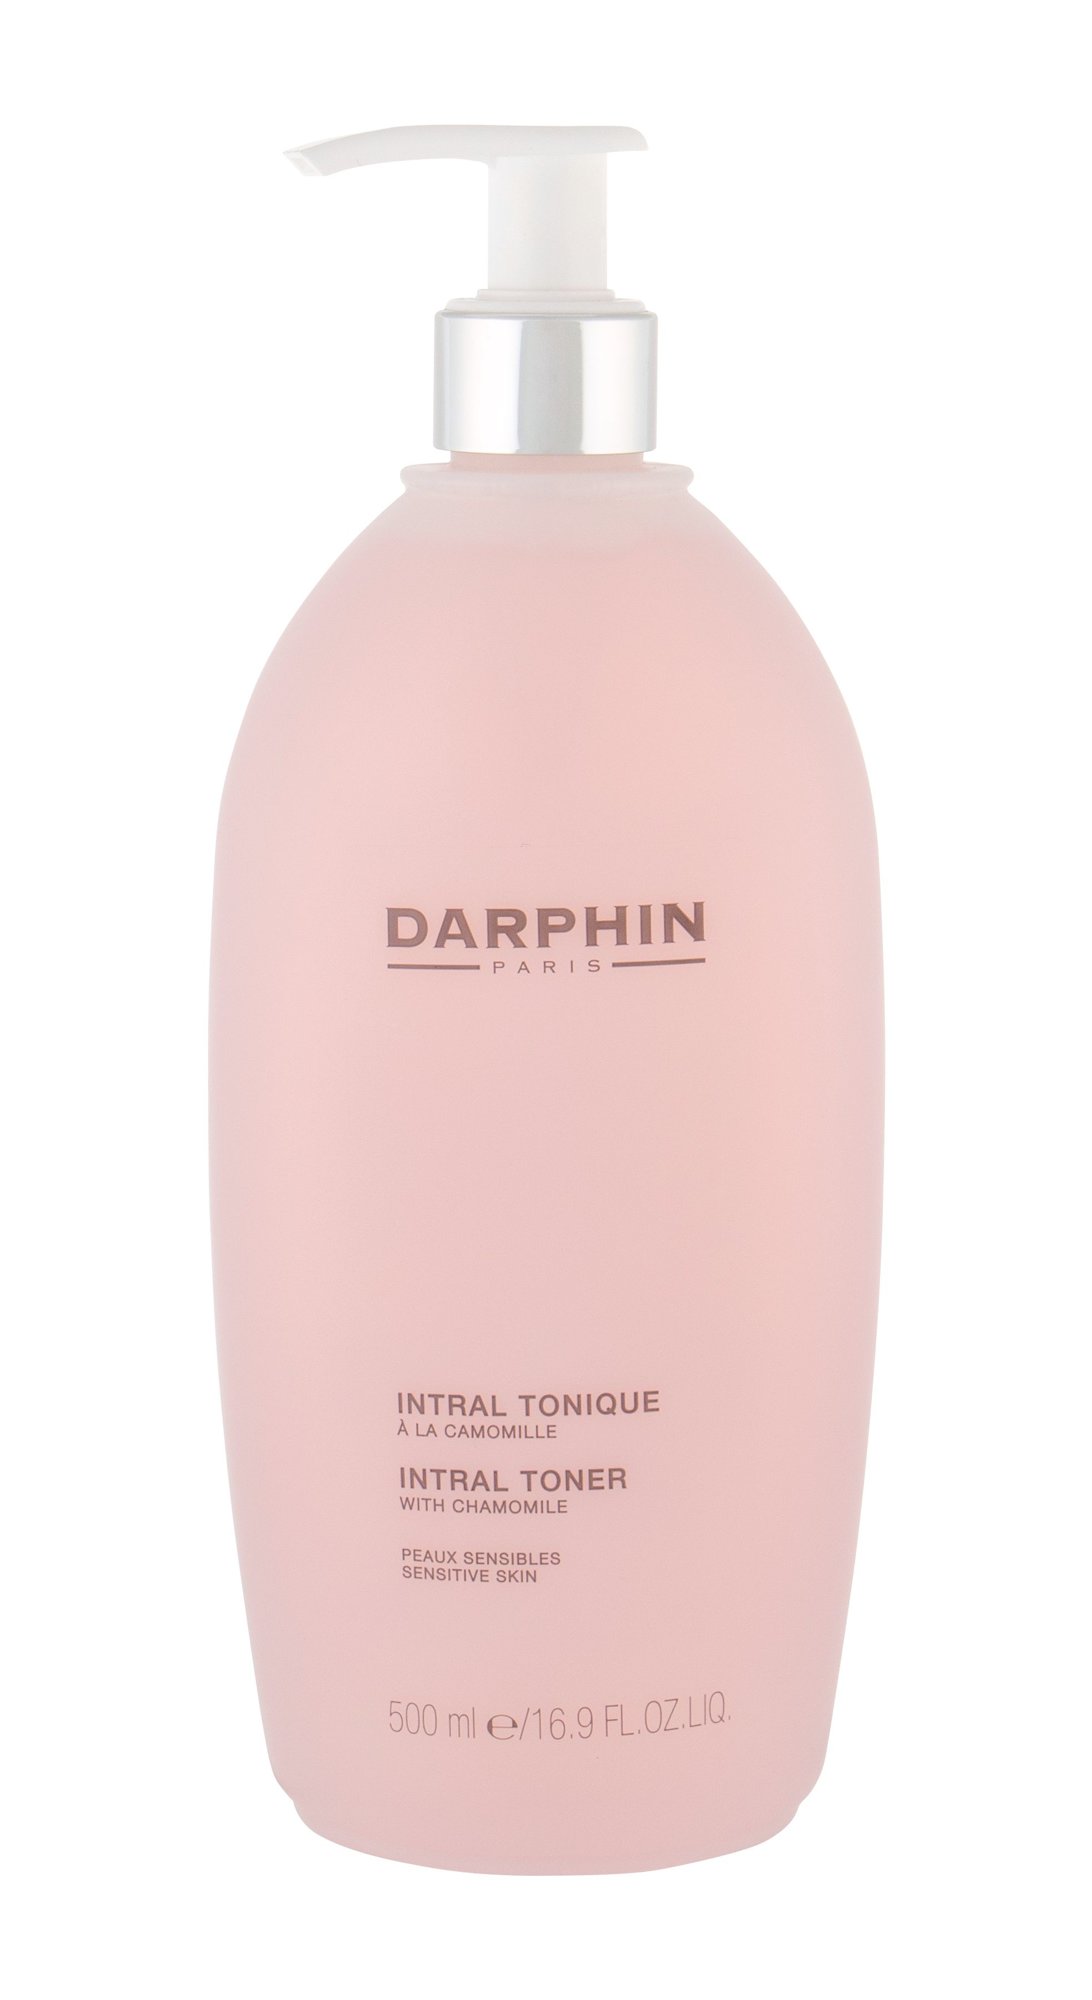 Darphin Intral valomasis vanduo veidui